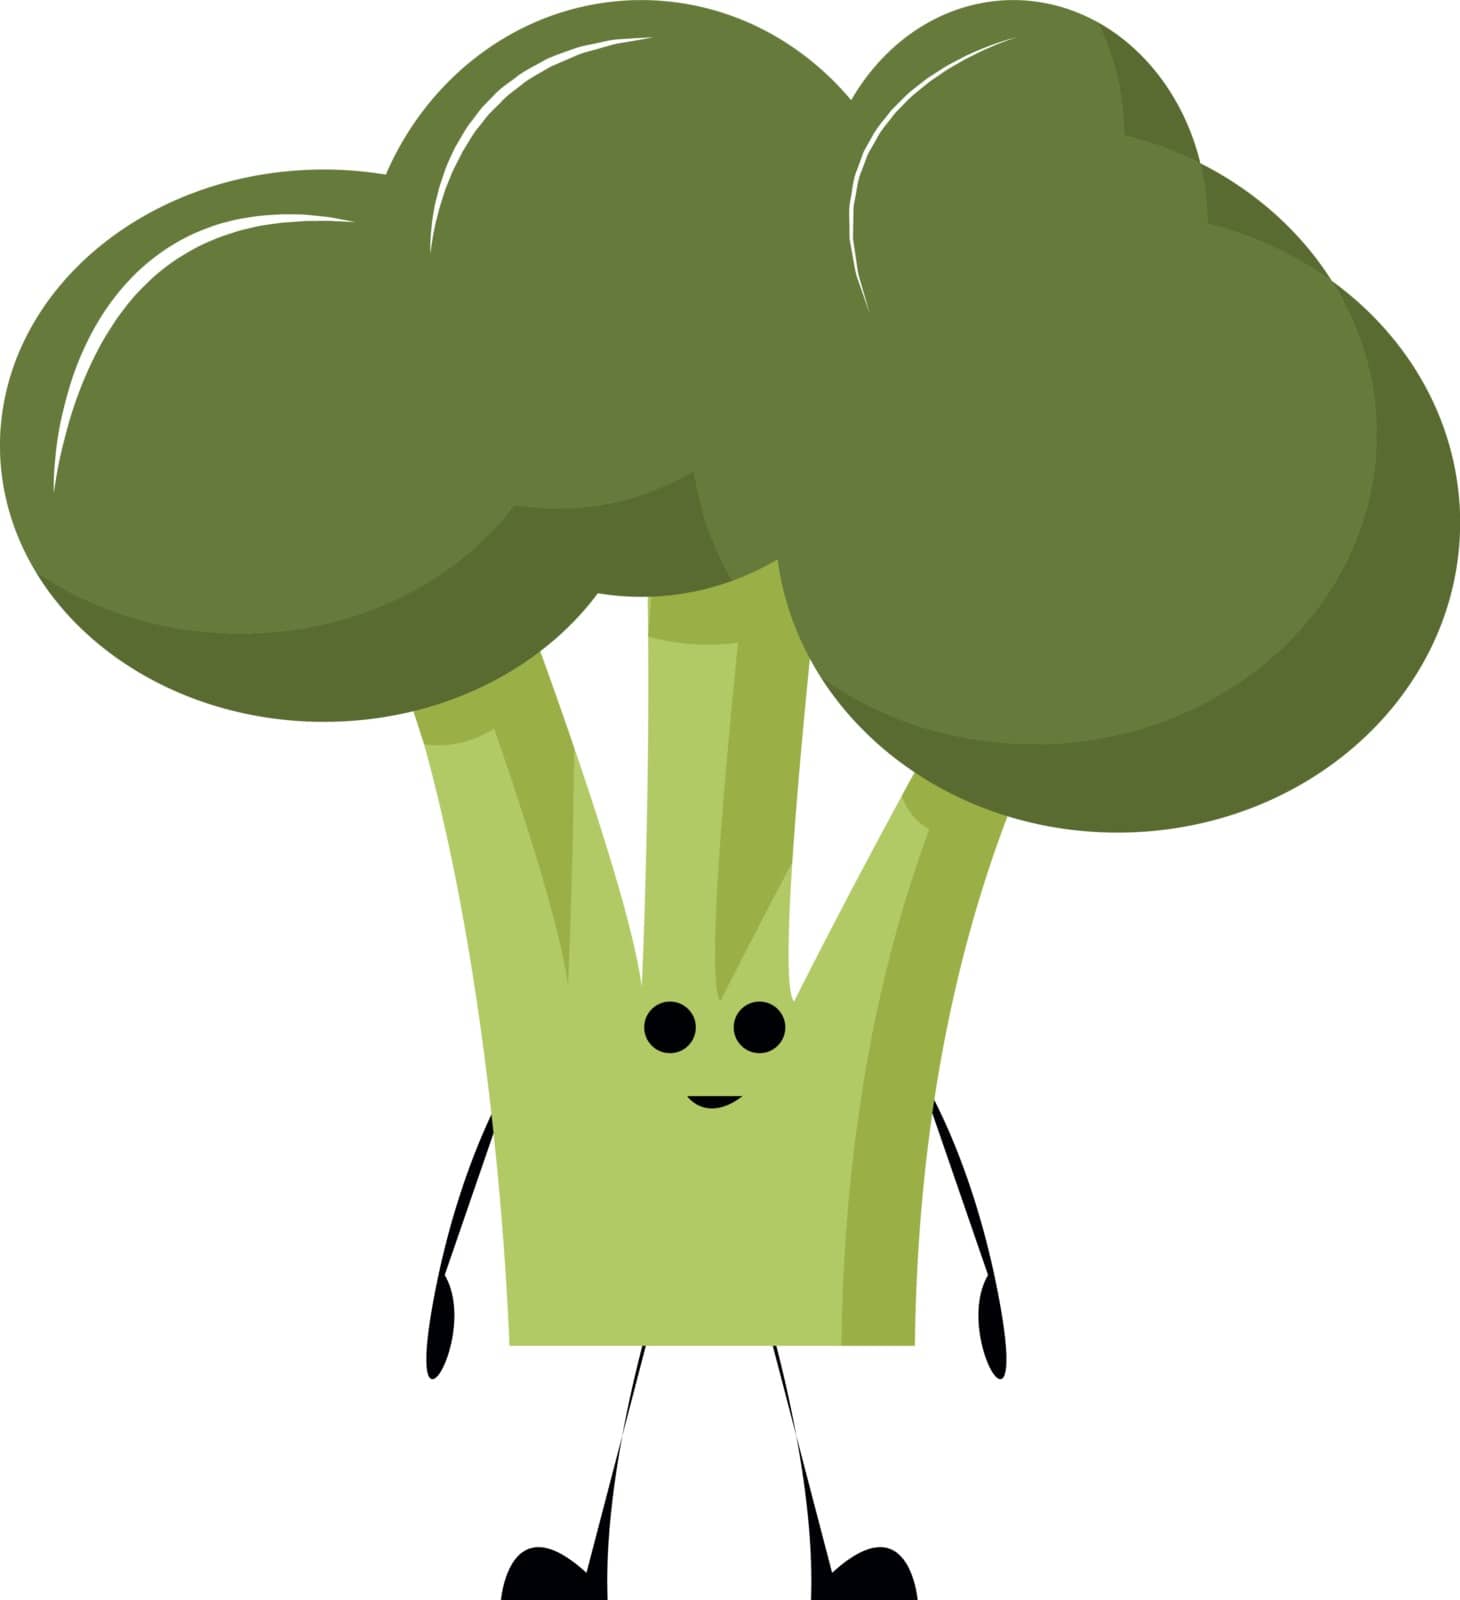 Happy broccoli, illustration, vector on white background.